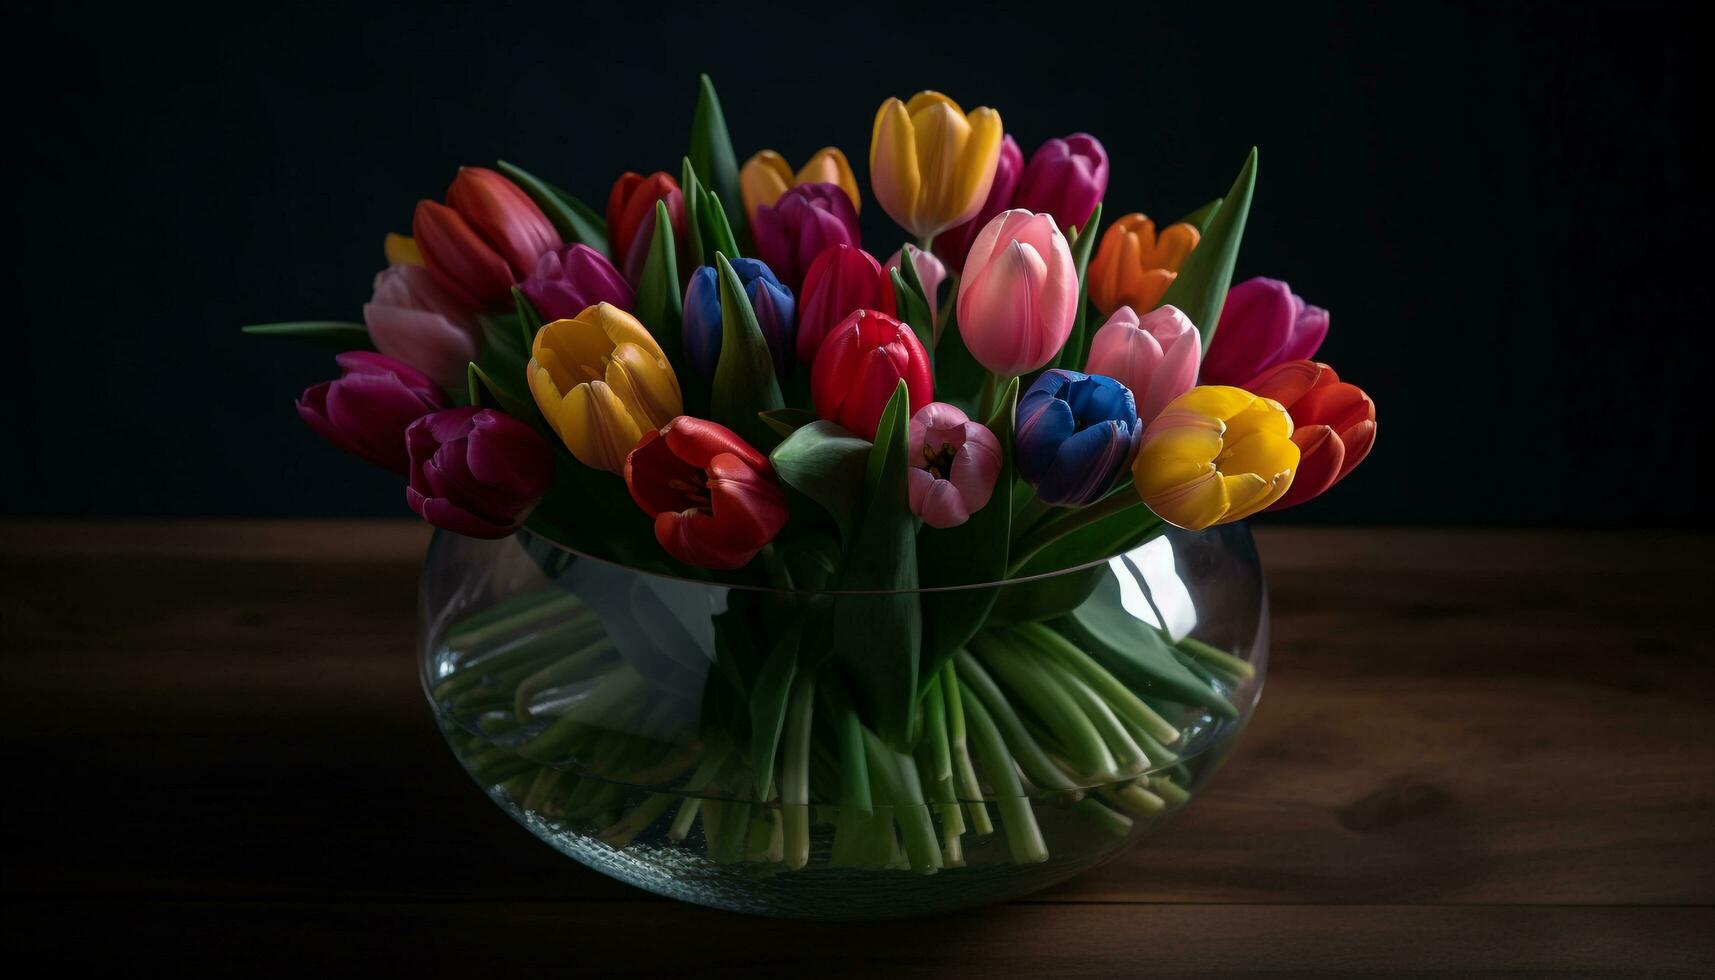 uma vibrante ramalhete do multi colori tulipas traz natureza dentro de casa gerado de ai foto